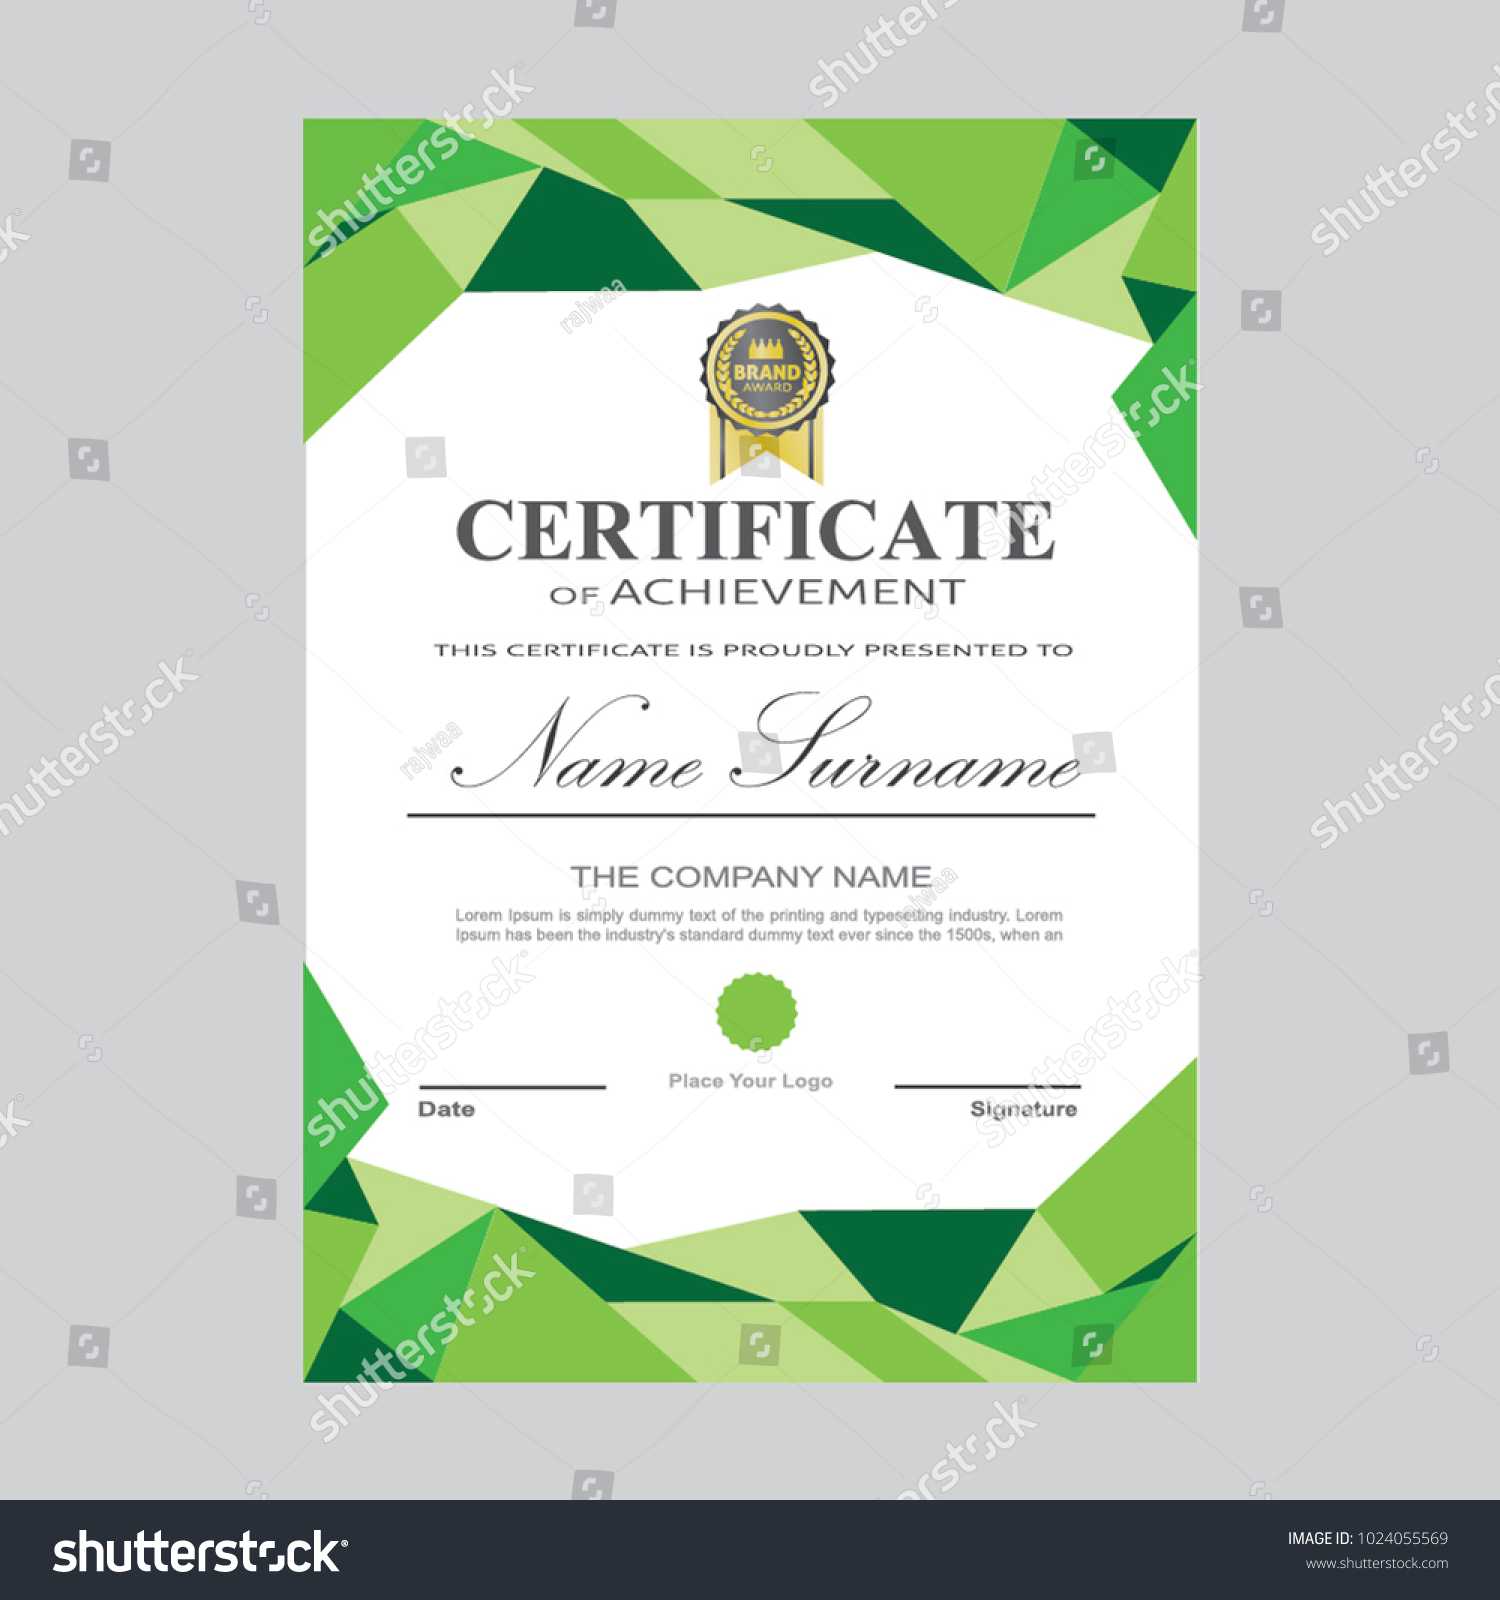 Certificate Template Modern A4 Horizontal Landscape Stock With Regard To Landscape Certificate Templates